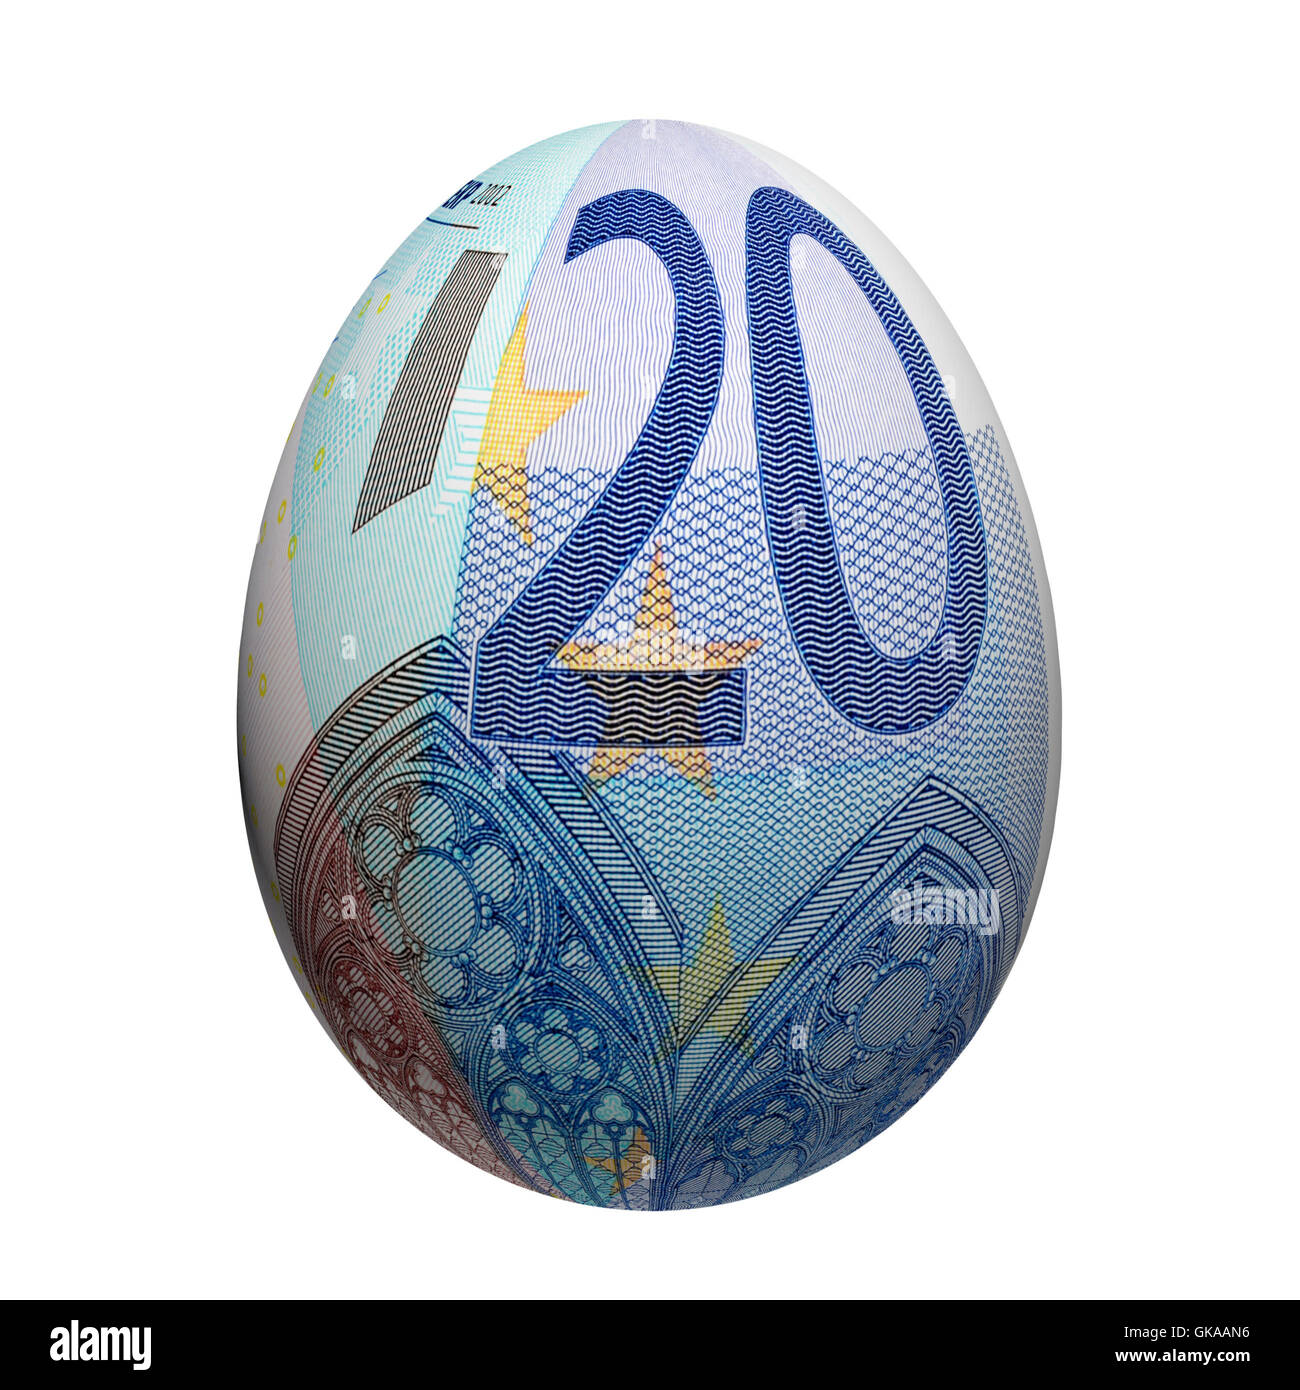 euro bank note easter egg Stock Photo